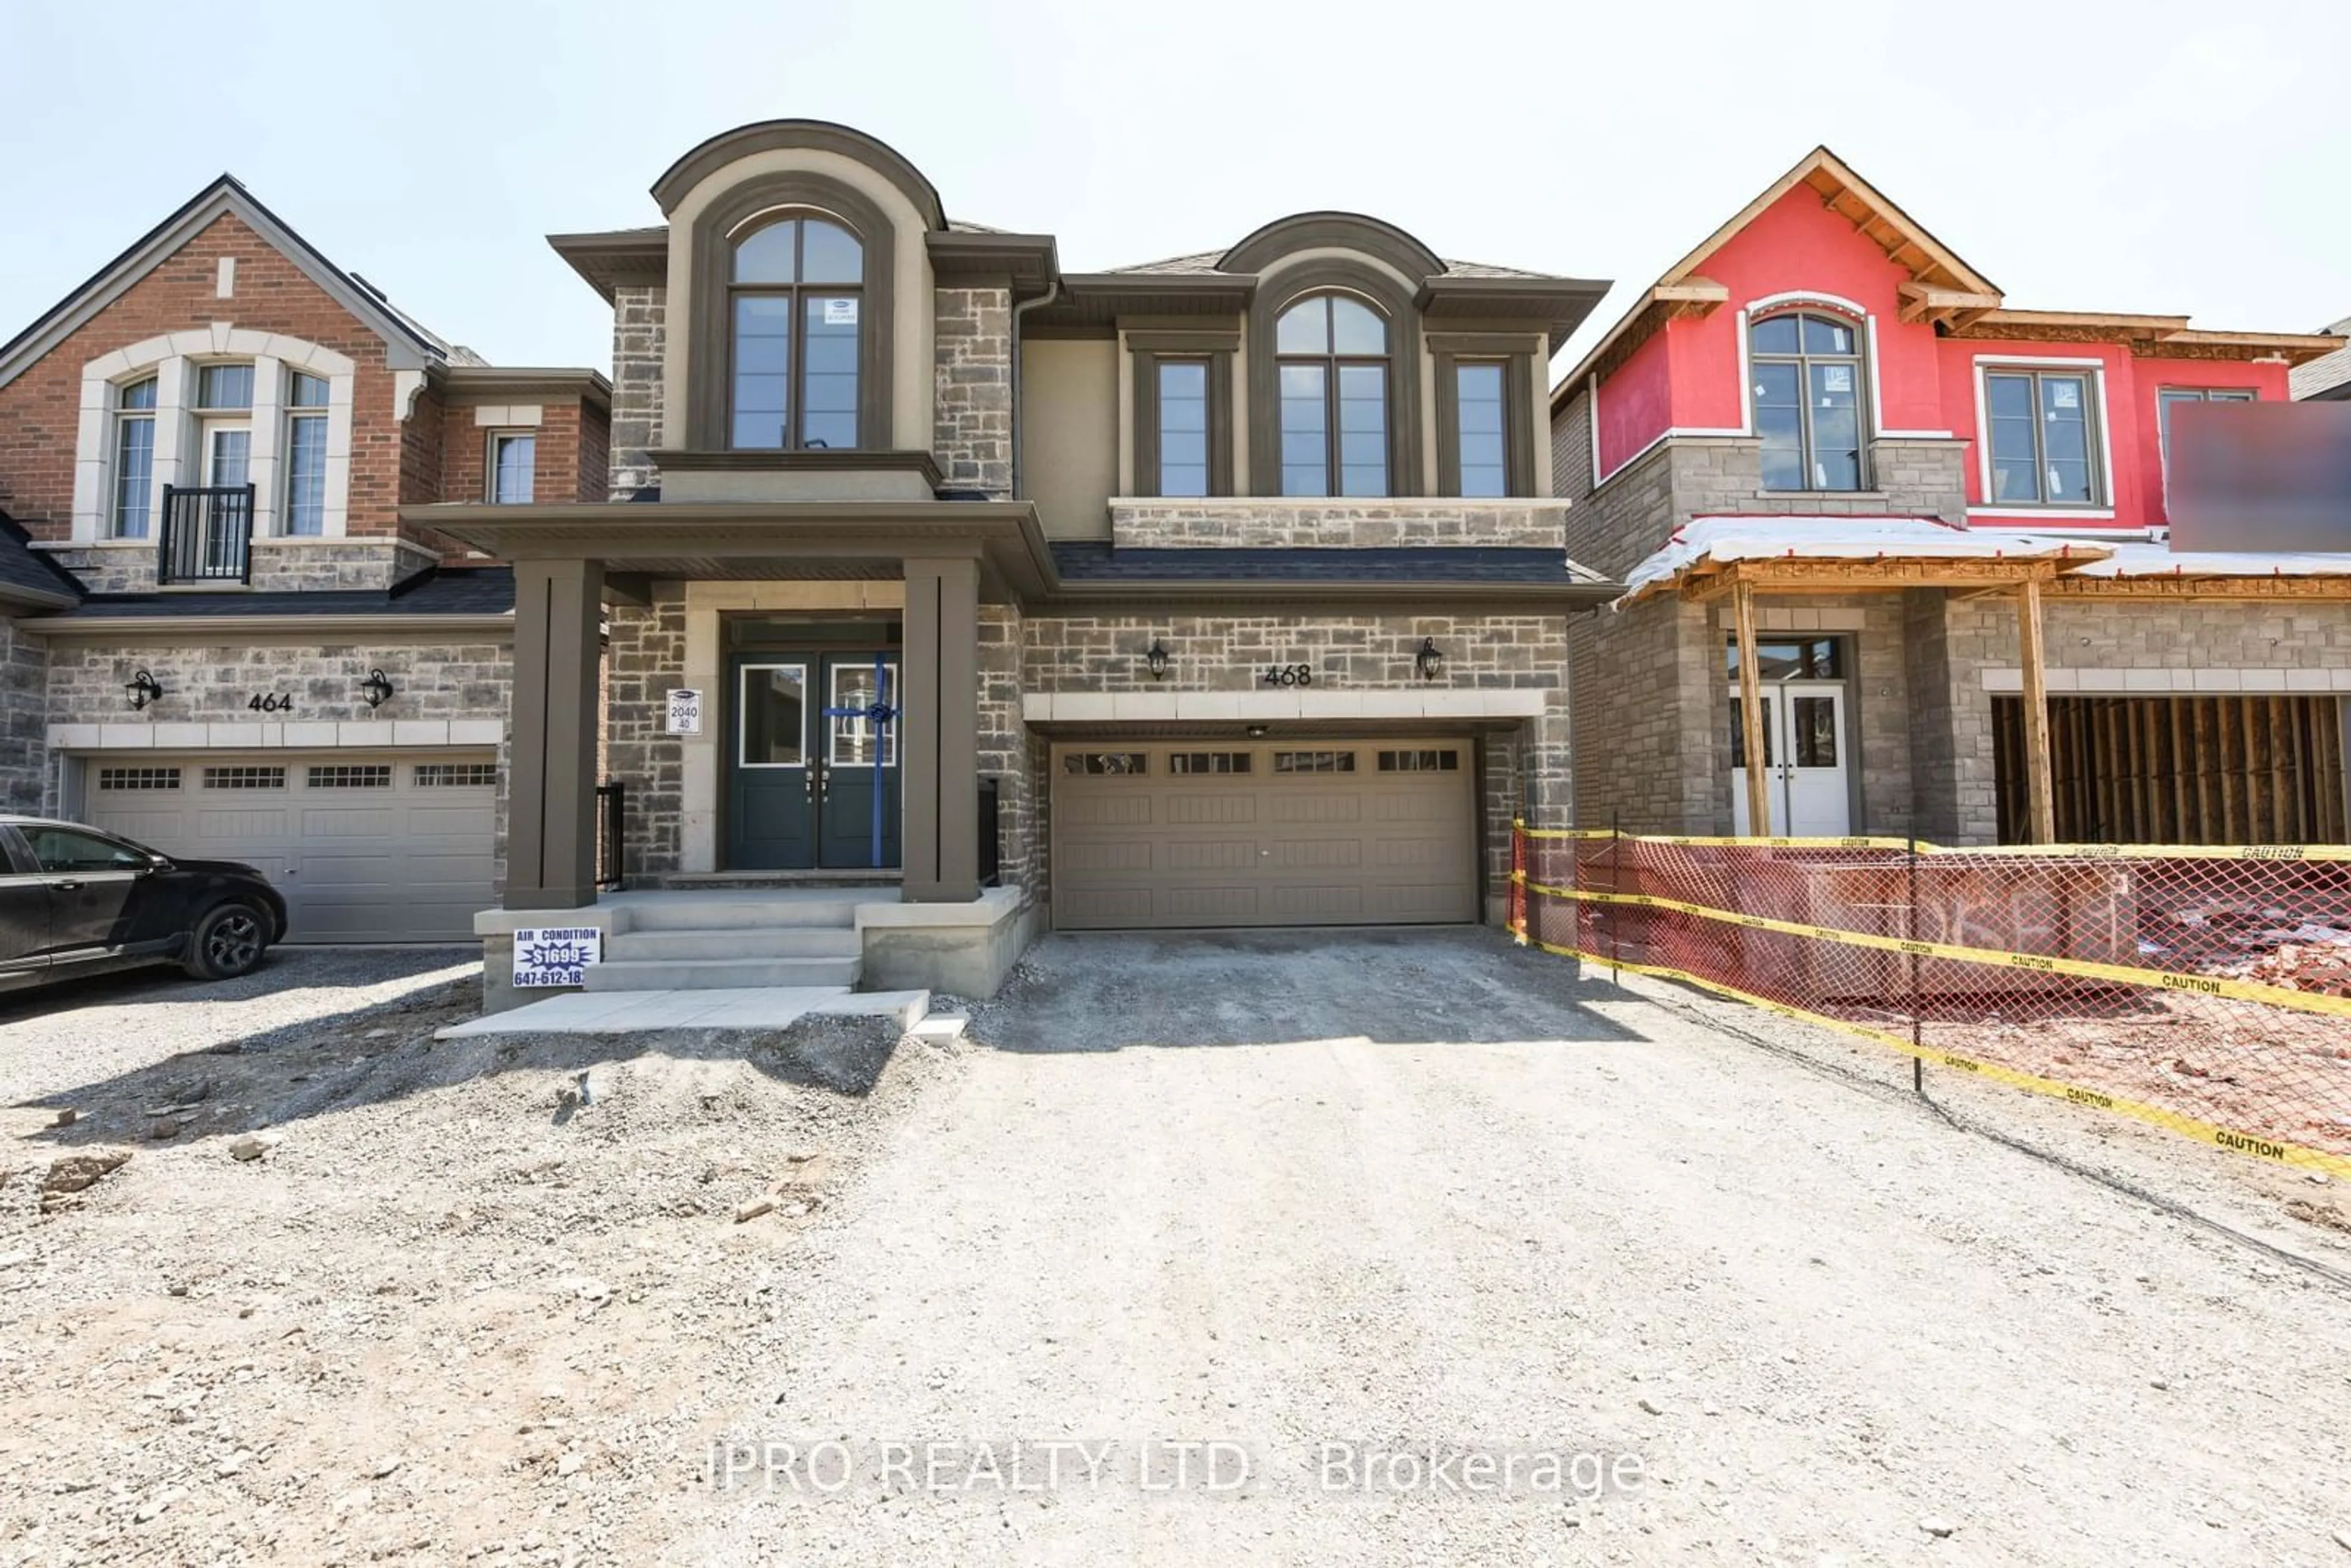 Home with brick exterior material for 468 Boyd Lane, Milton Ontario L9E 1W6